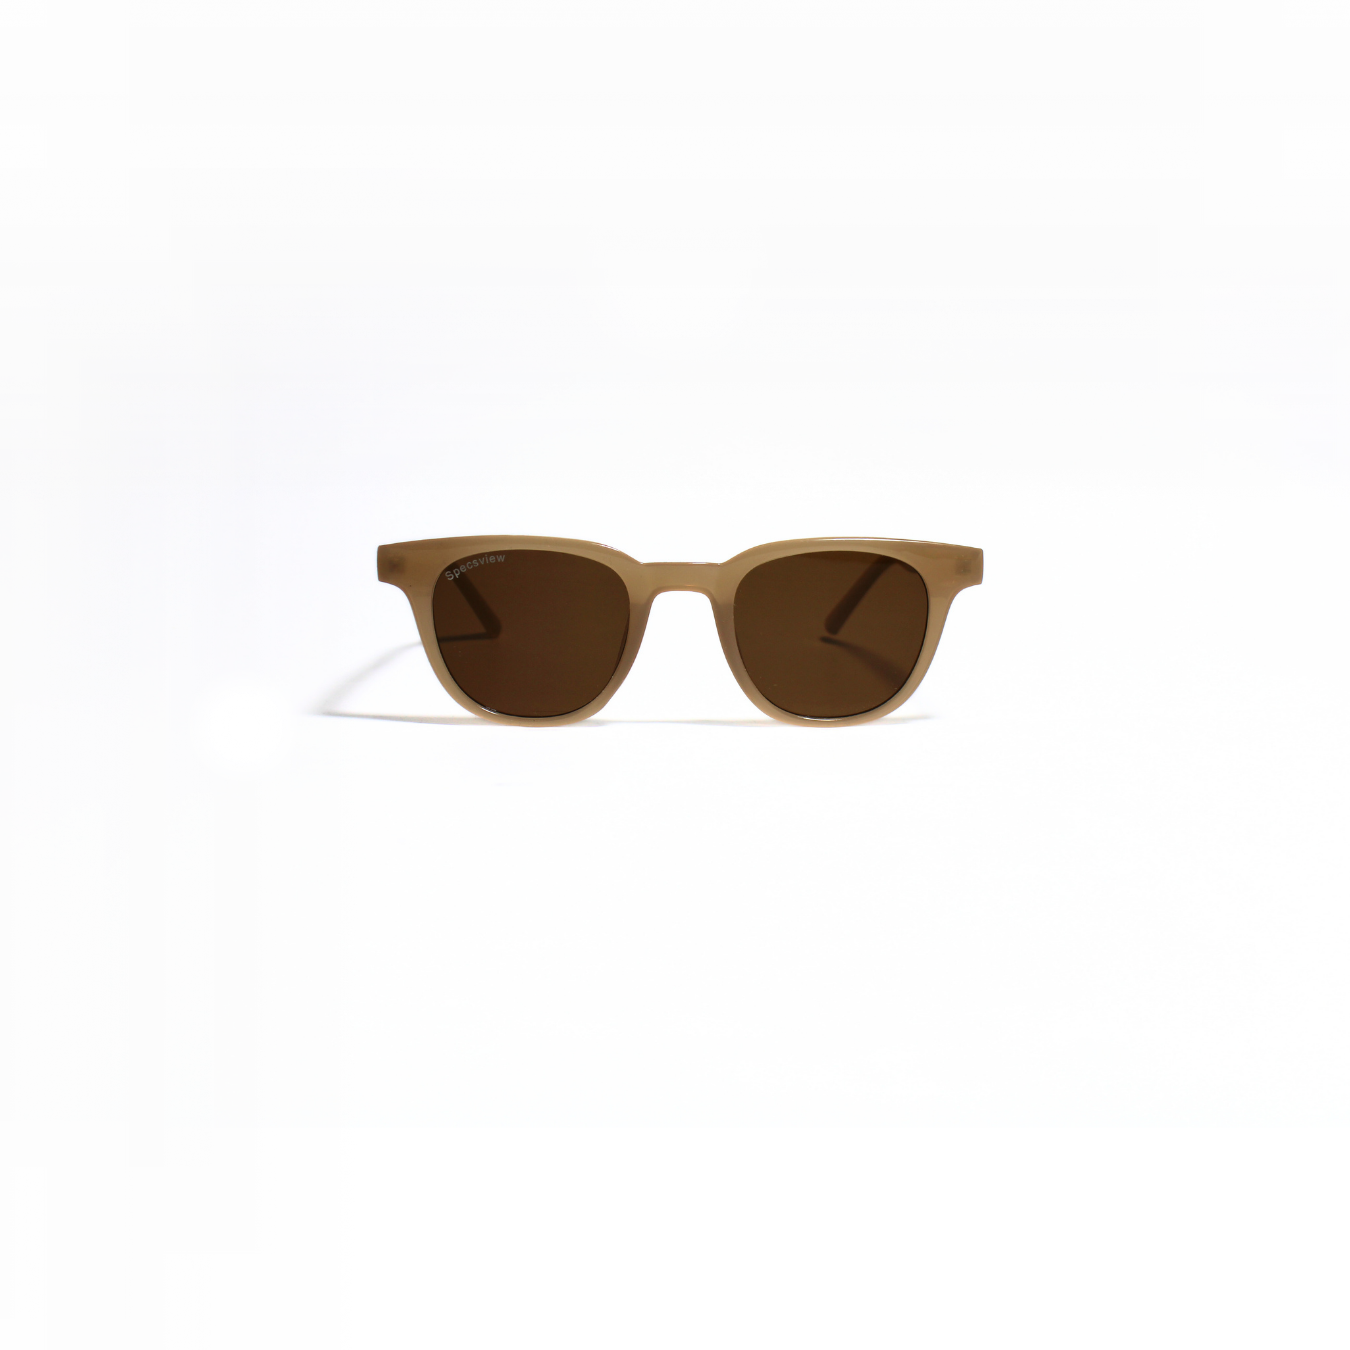 DAPHNE//002 I Sunglasses for Men and Women - Specsview